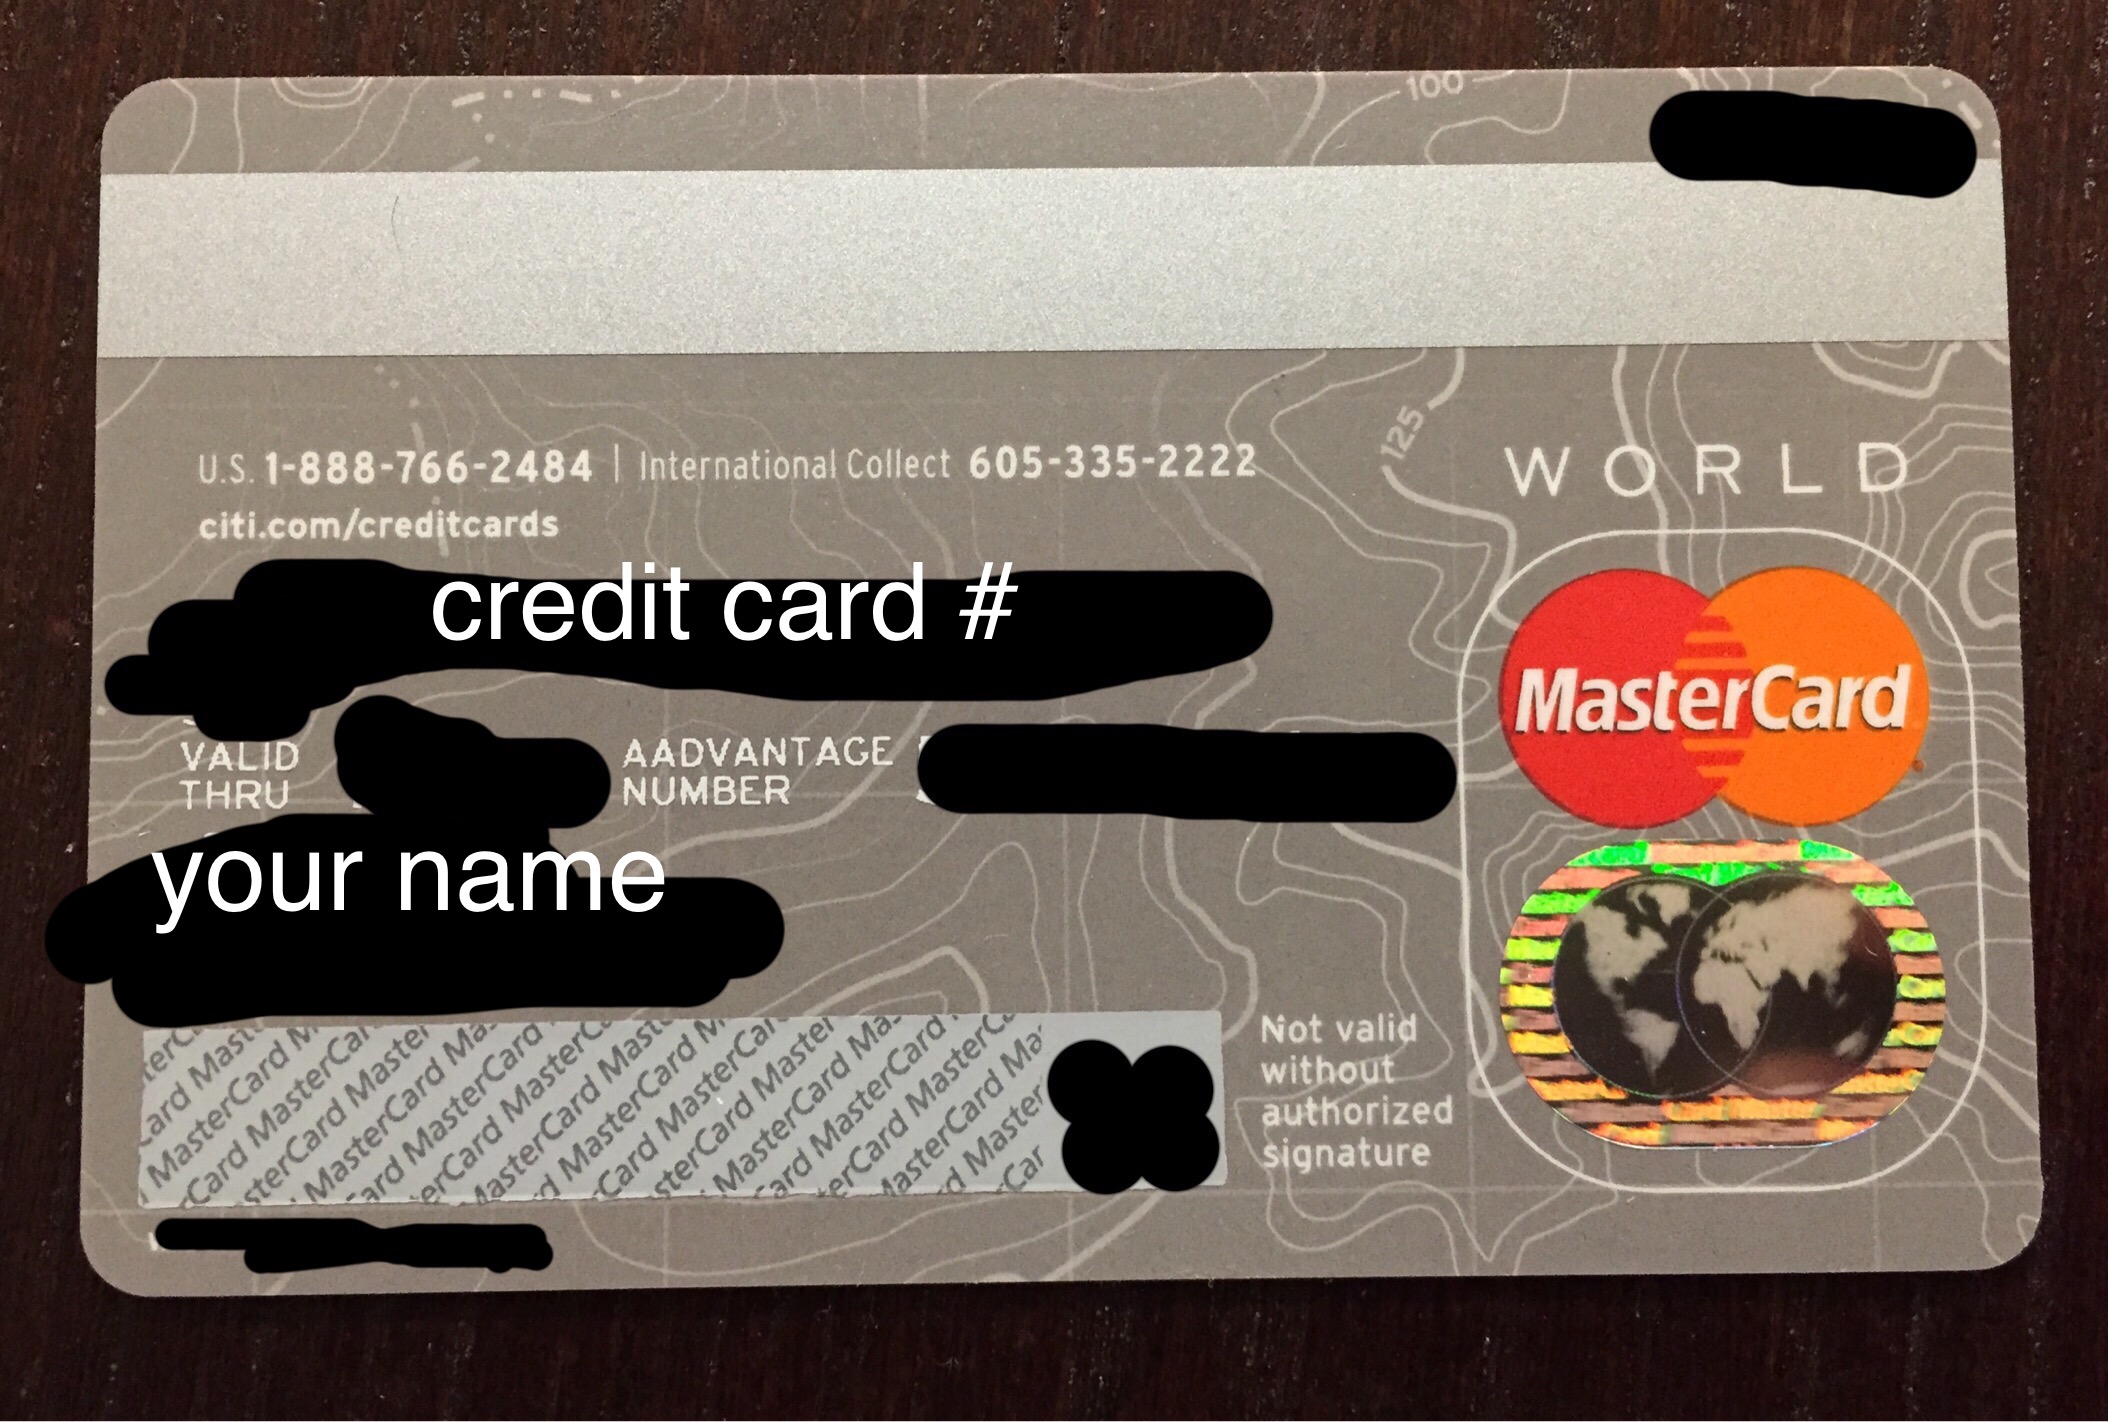 aa citi card customer service number